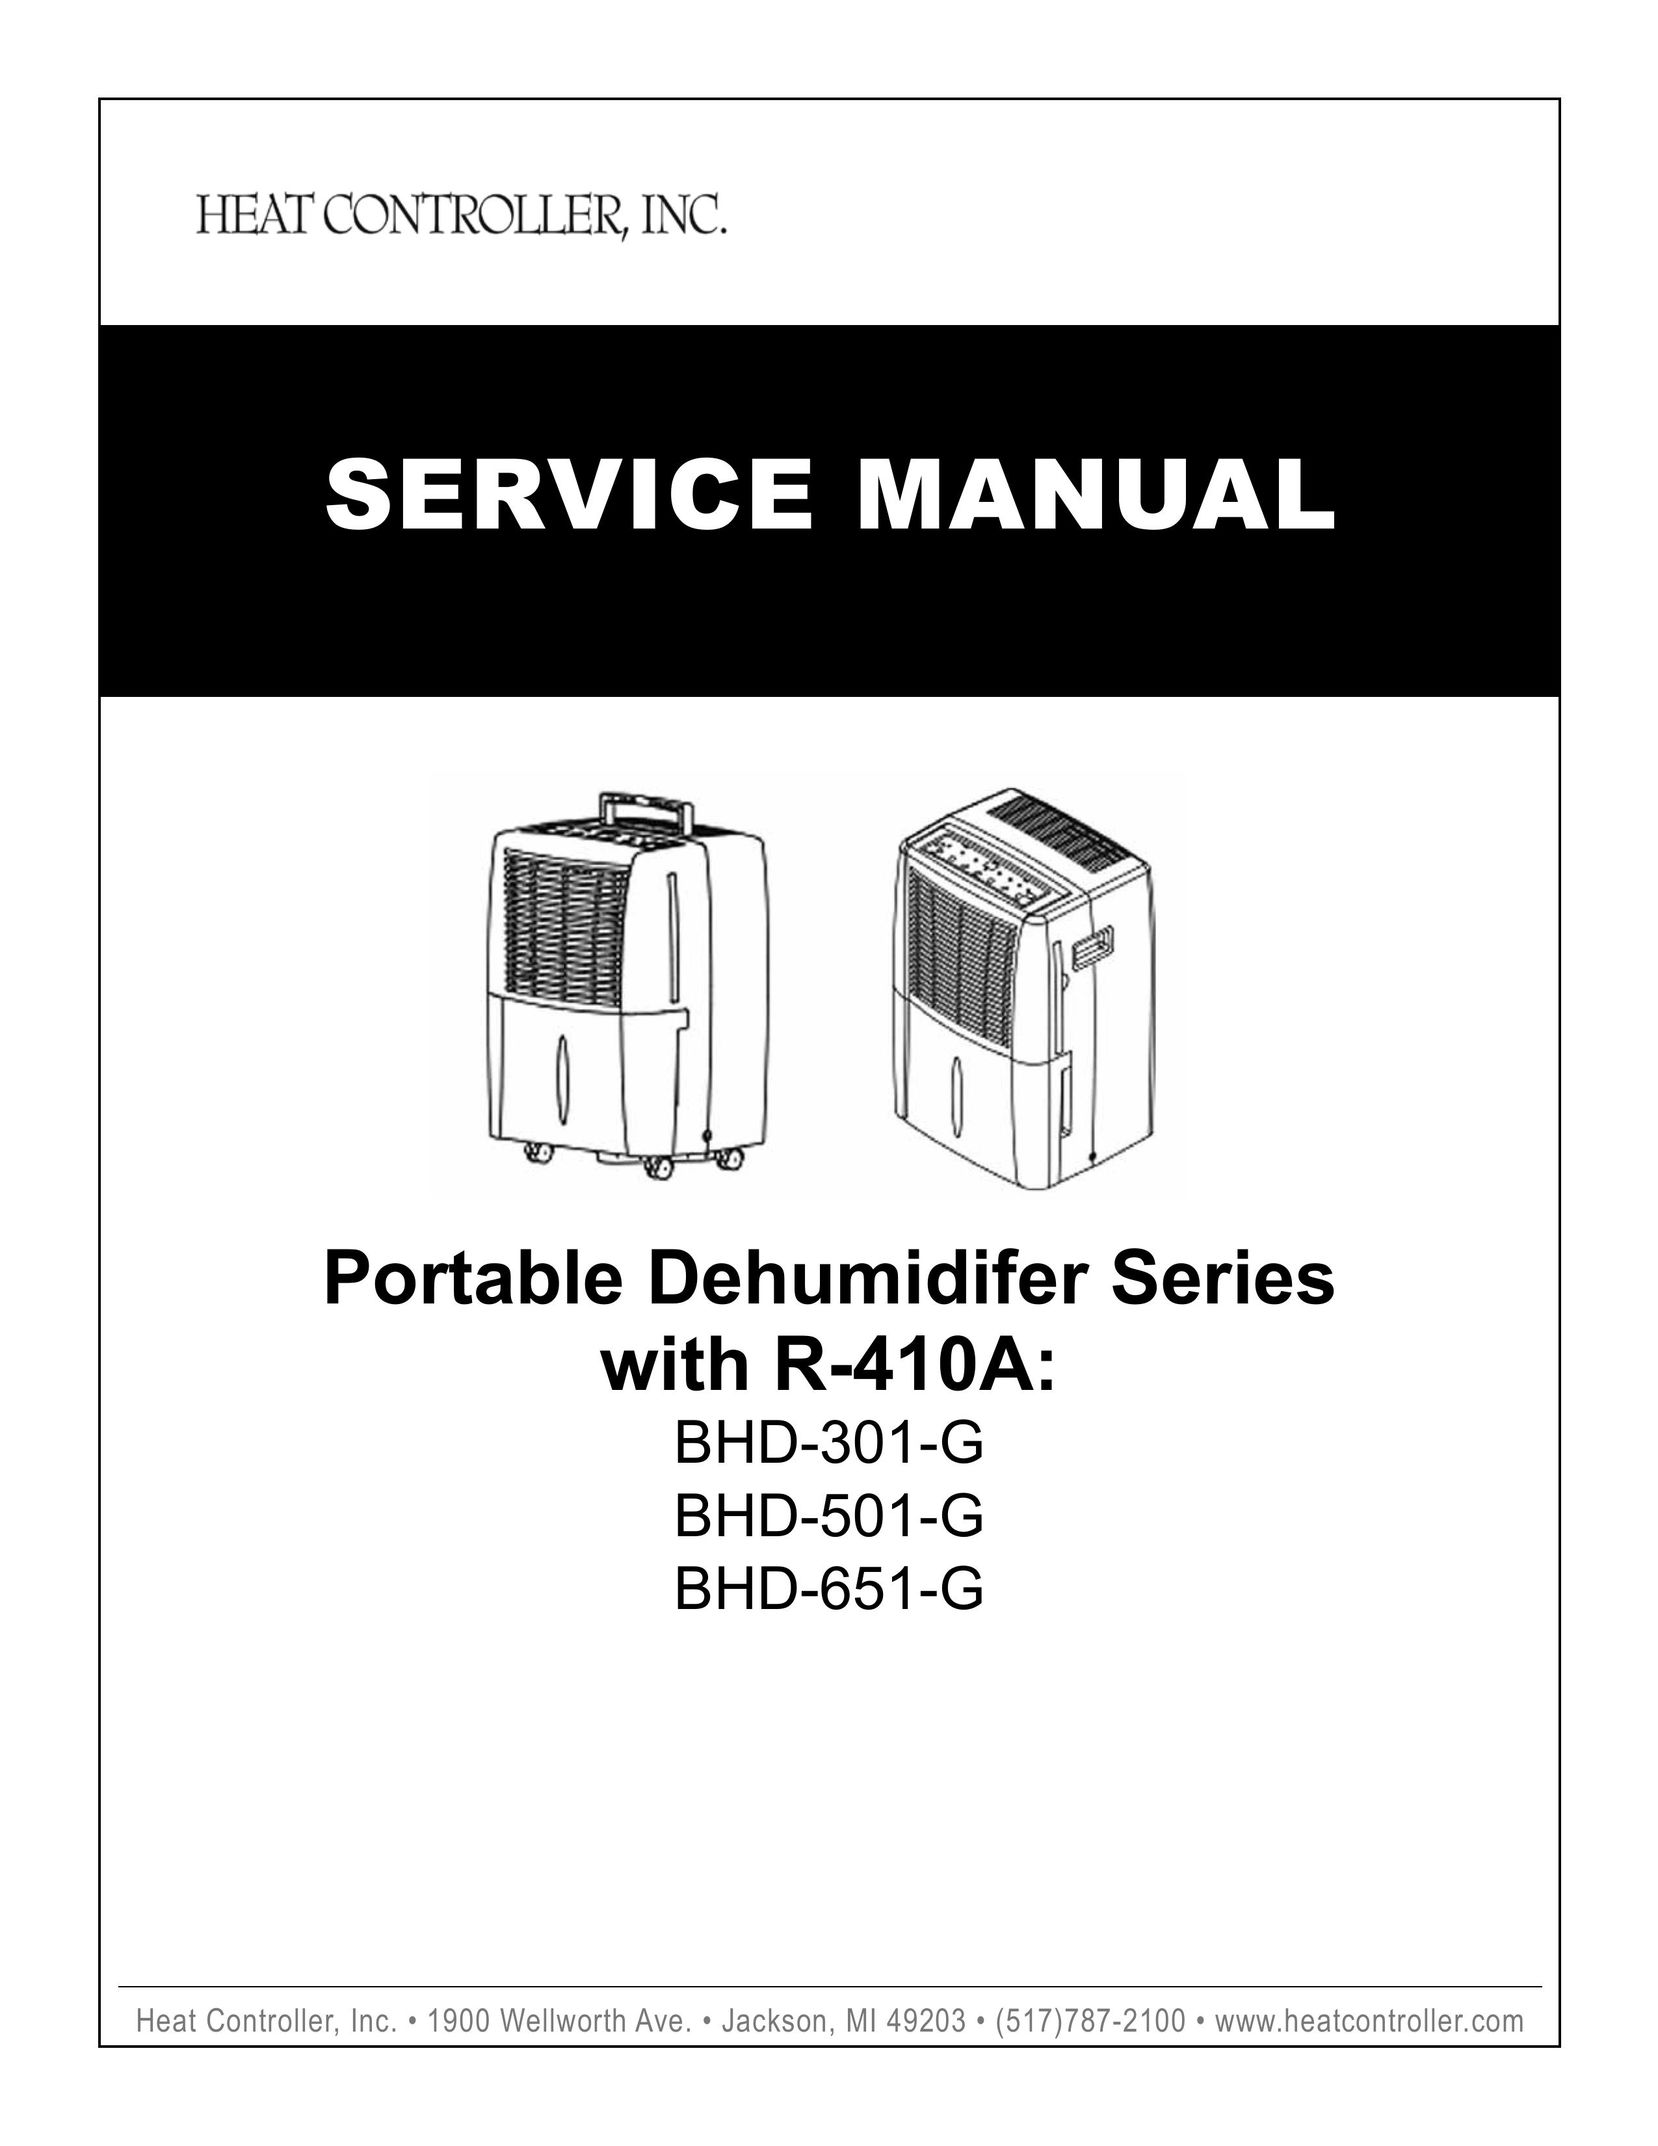 Heat Controller BHD-501-G Dehumidifier User Manual